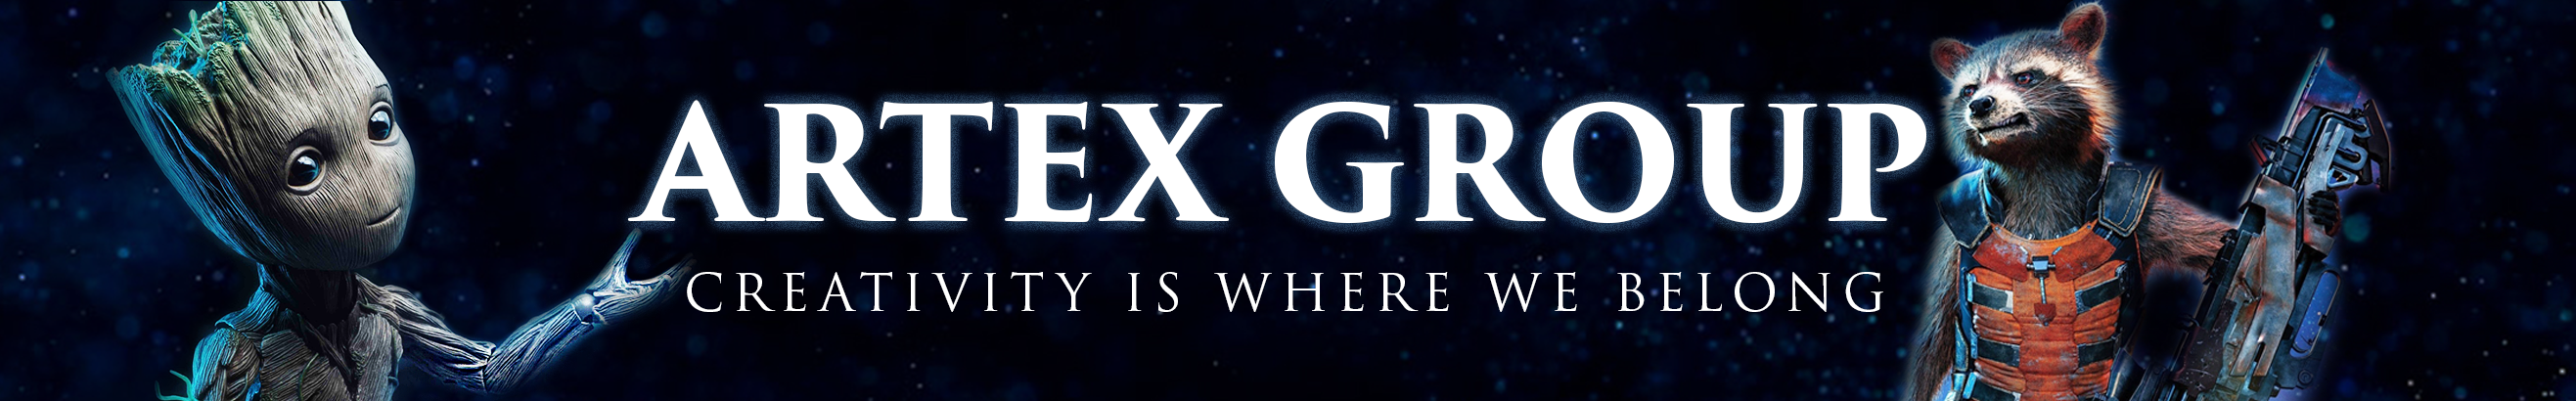 Artex Group's profile banner